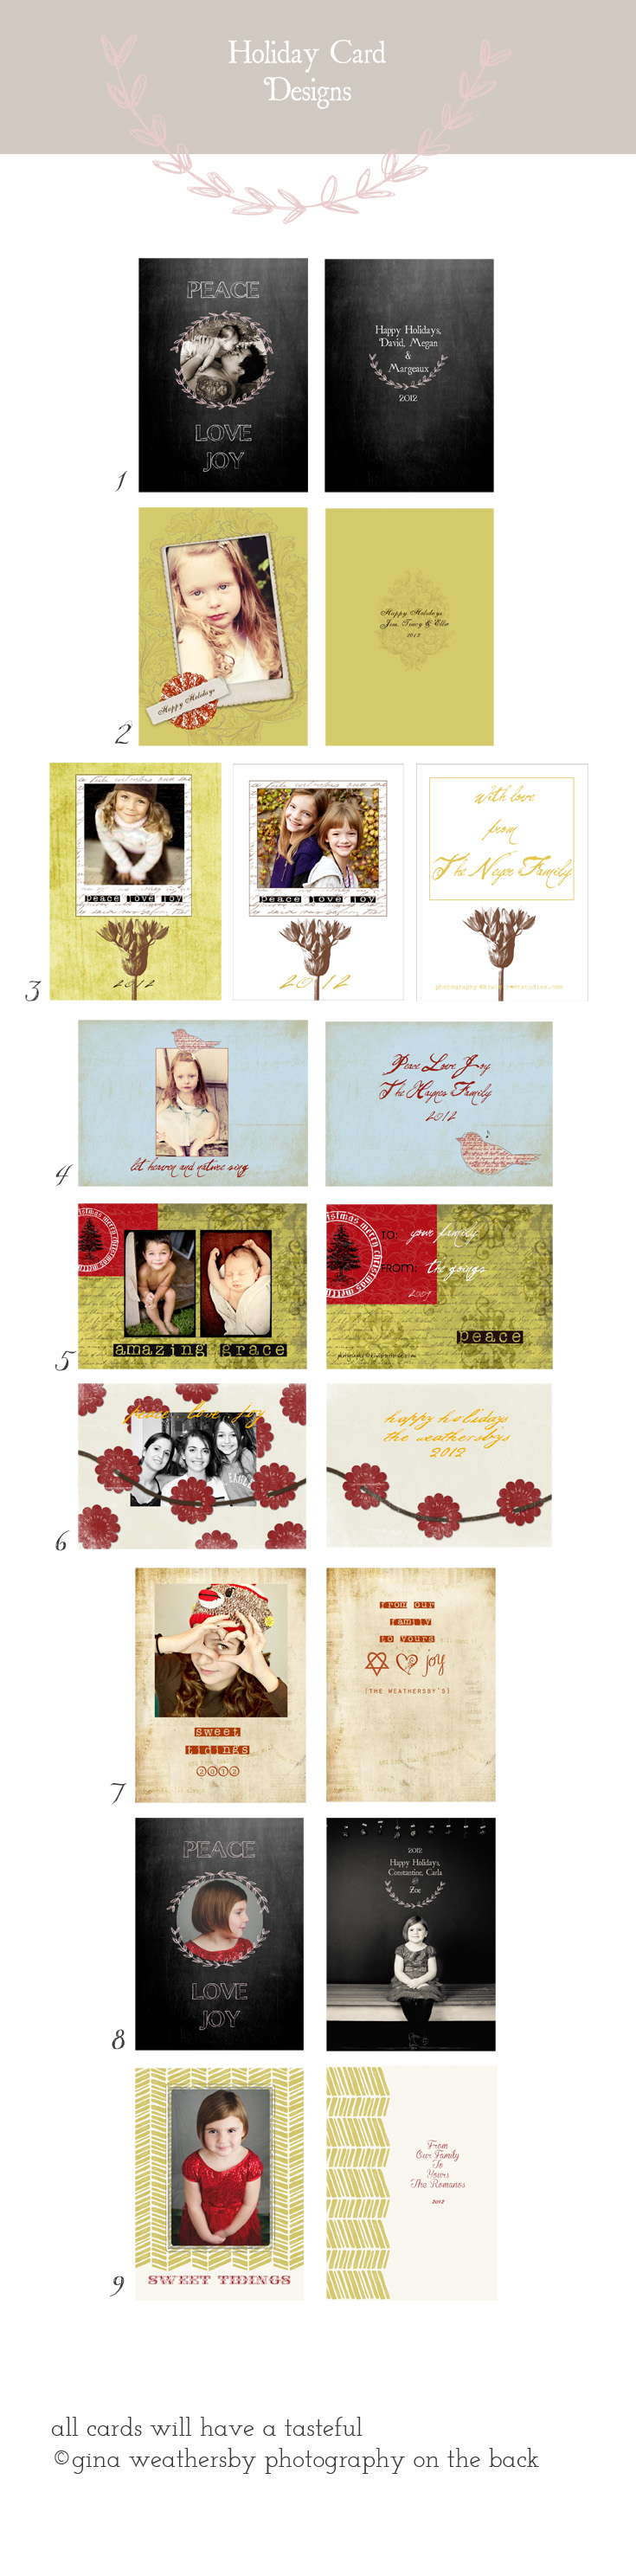 holiday card designs 2012cr